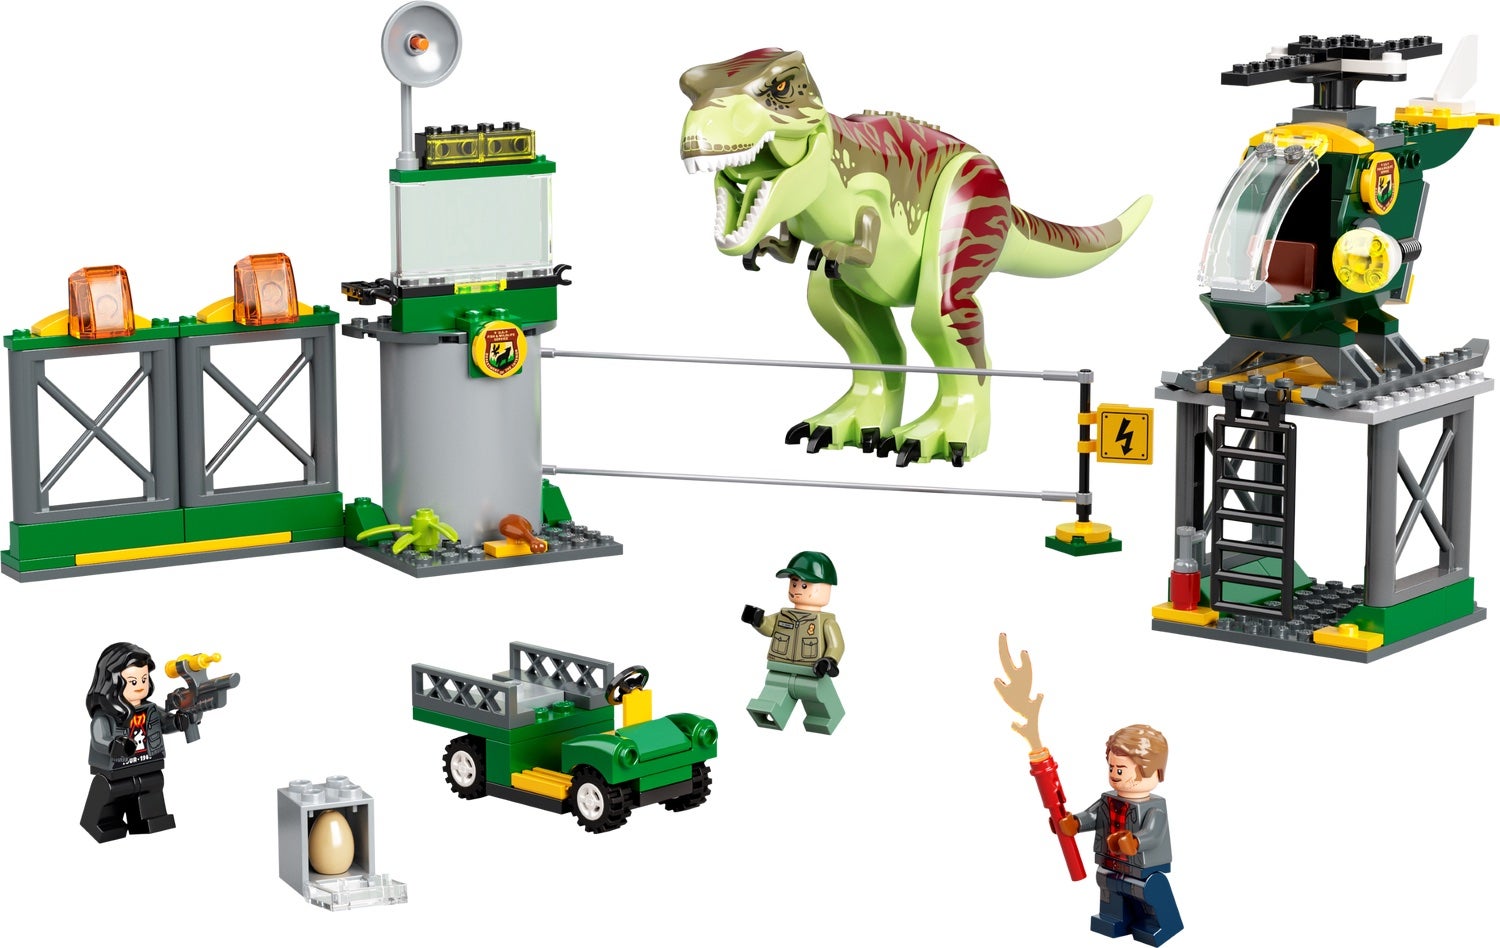 The Lego dinosaur set 